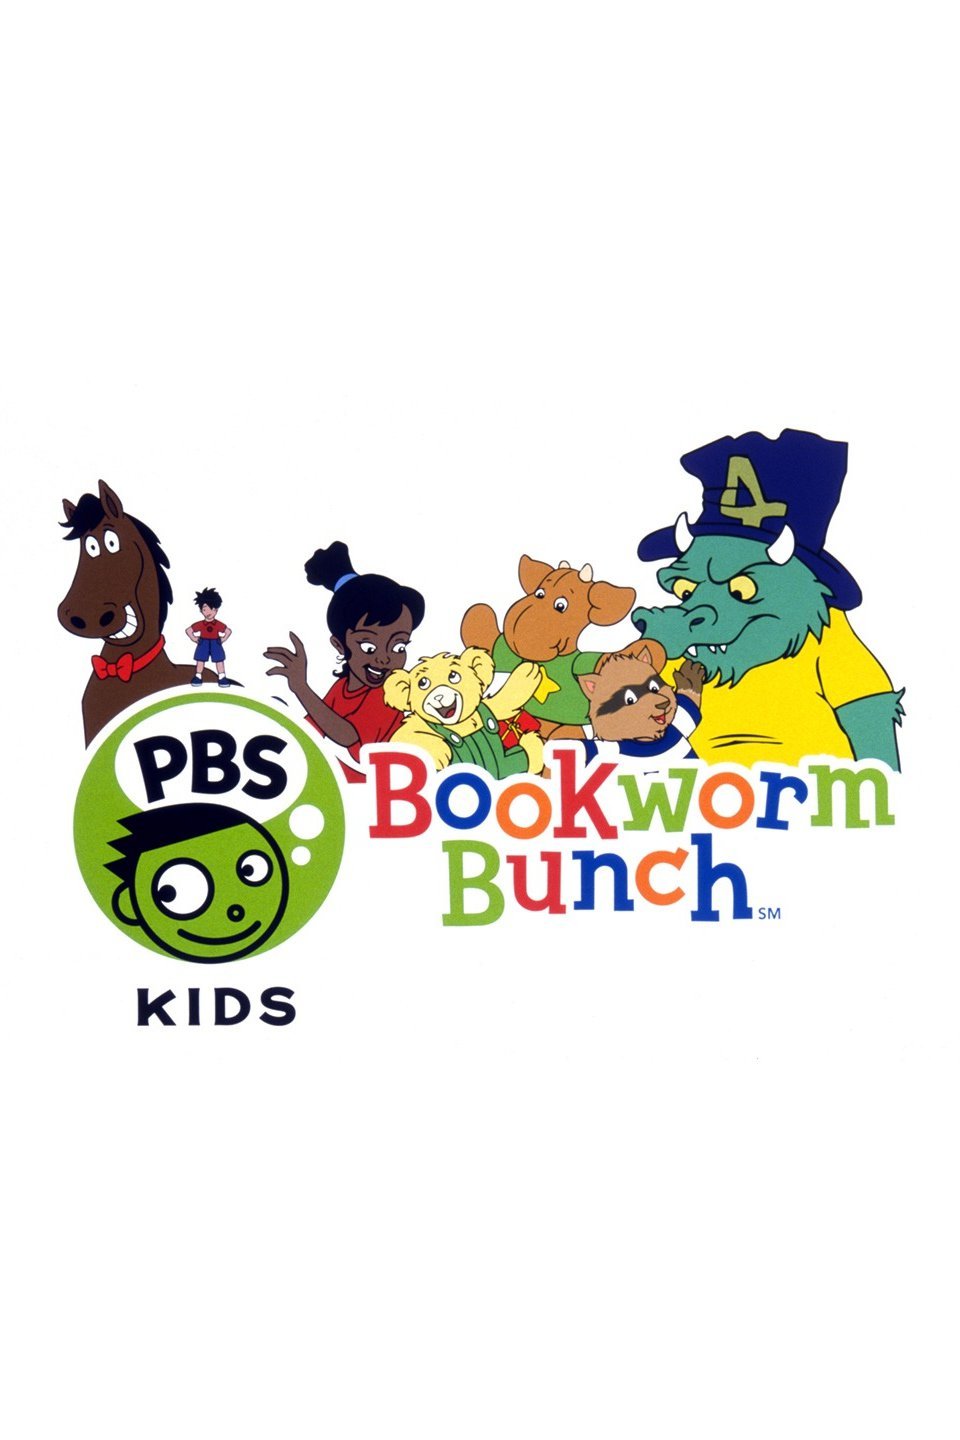 PBS Kids Bookworm Bunch - Rotten Tomatoes